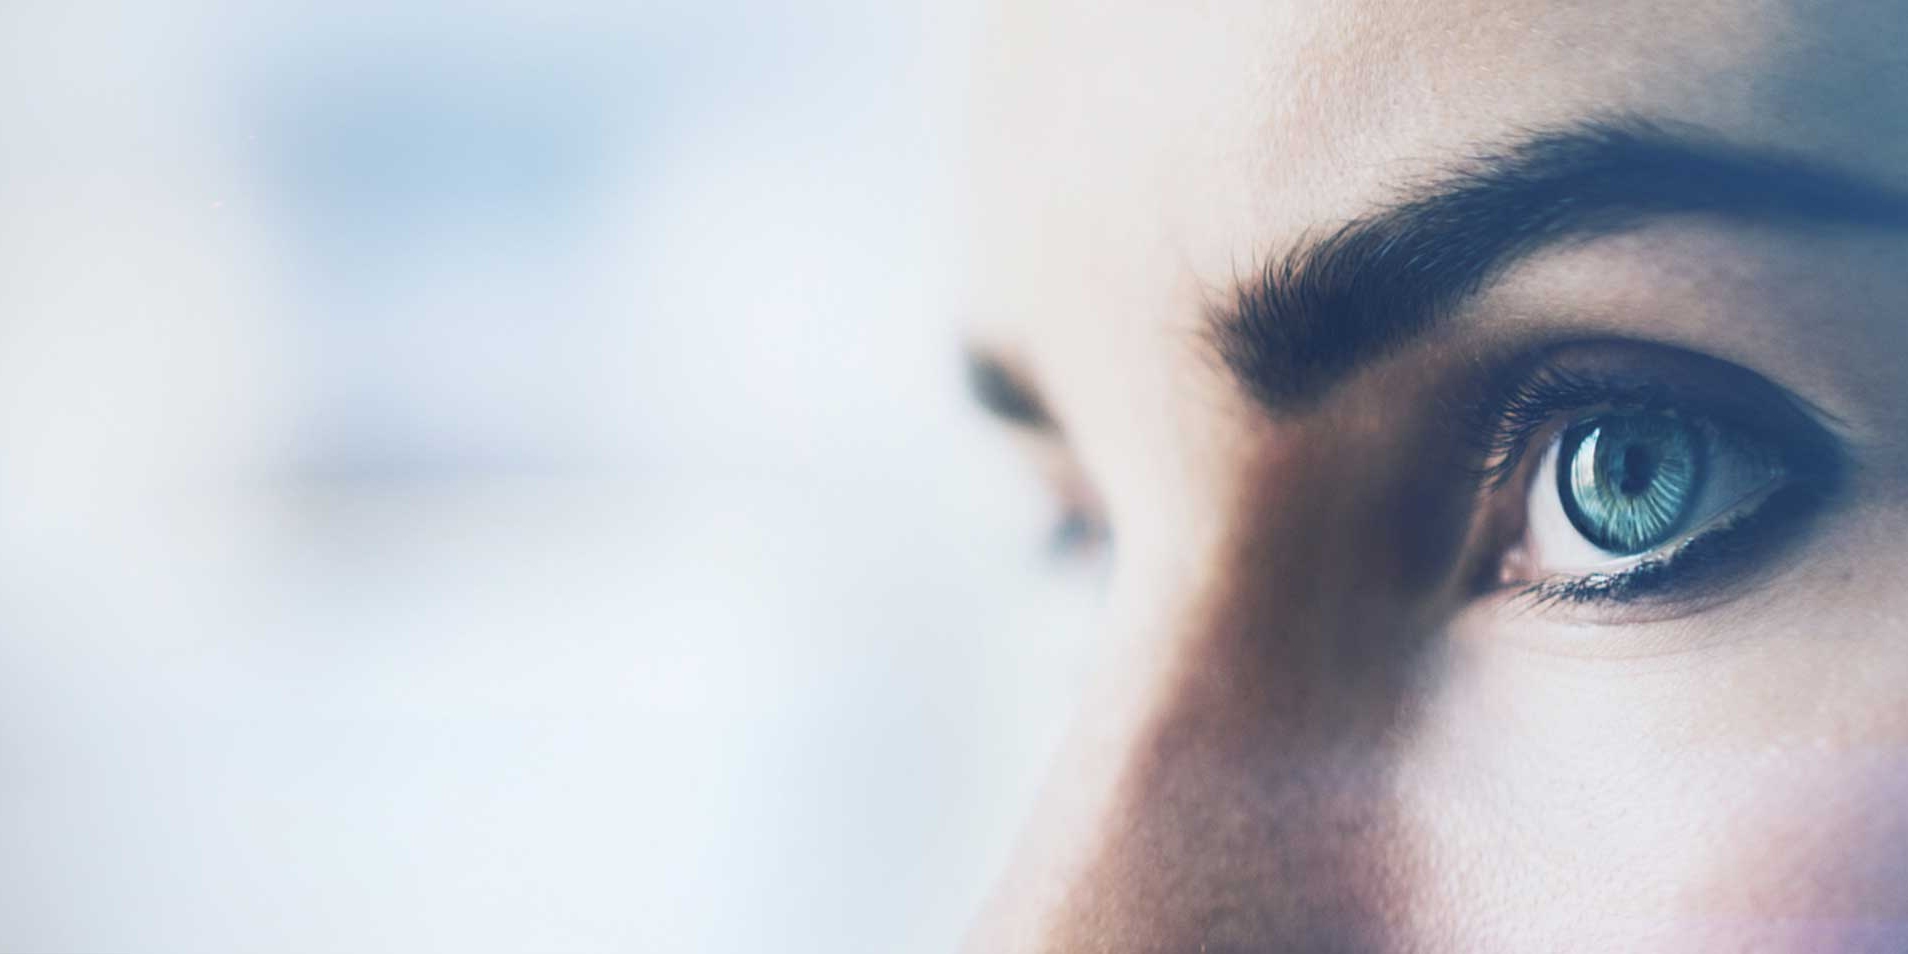 Blízký záběr na ženské oko s vizuálními efekty. Oko je izolované na bílém pozadí.